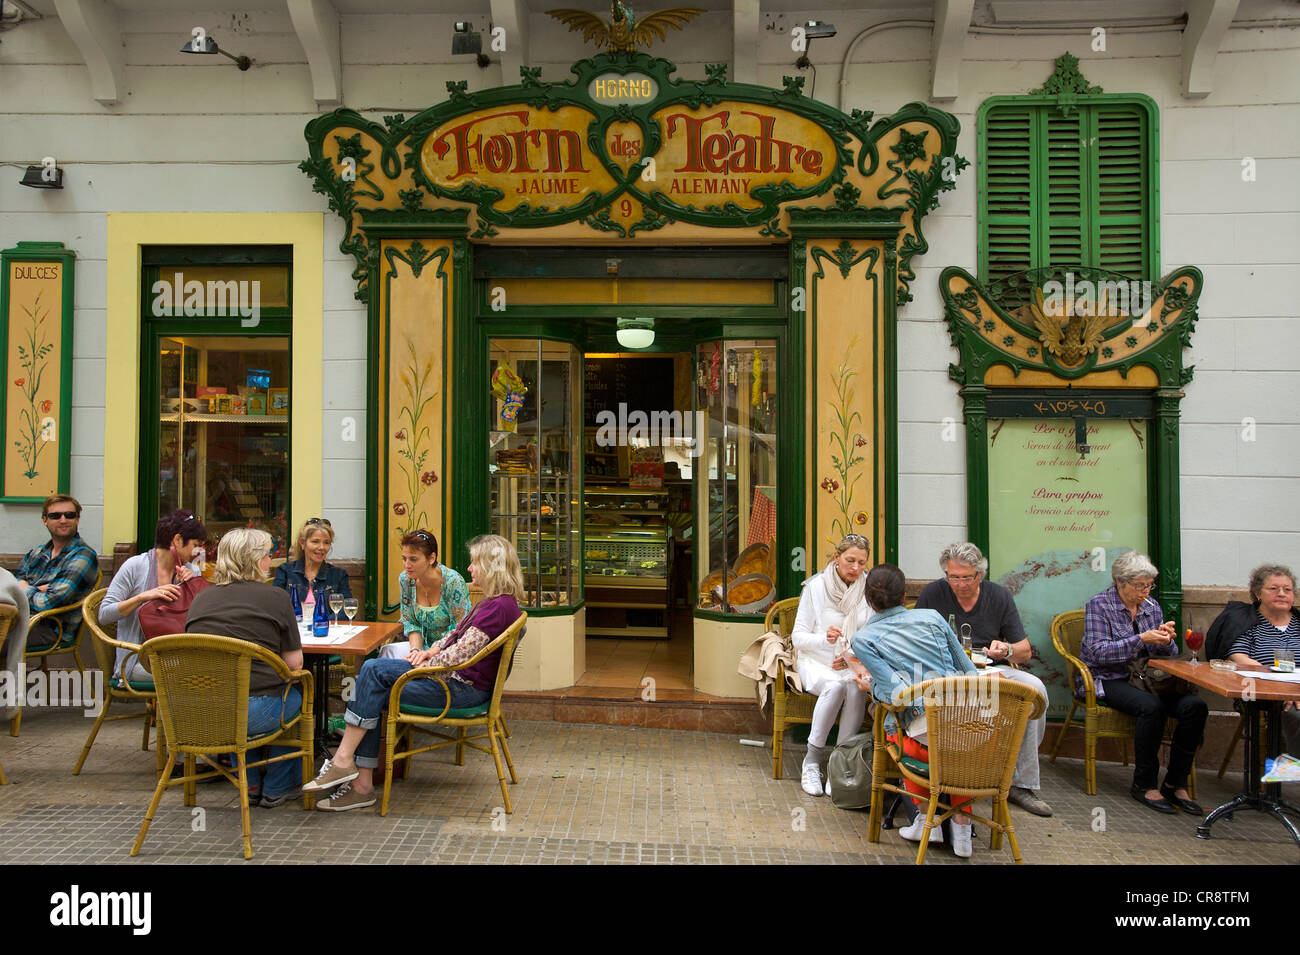 Bakery and cafe 'Forn de Teatro' in Palma de Mallorca, Majorca, Balearic Islands, Spain, Europe Stock Photo